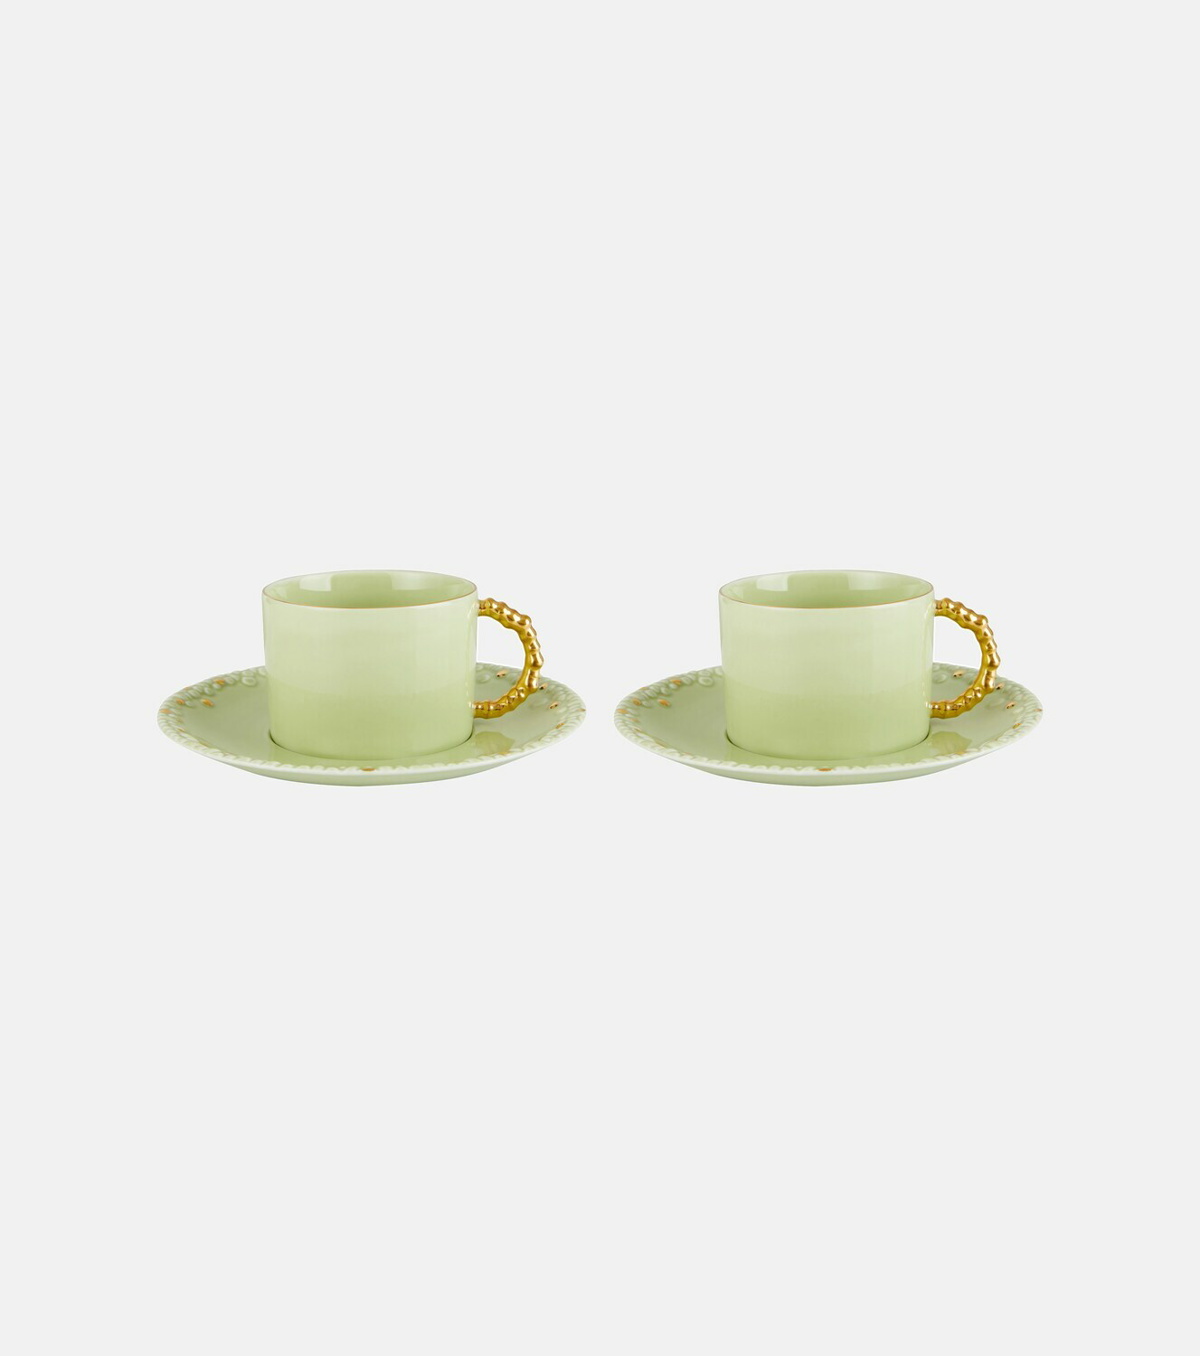 L'Objet Malachite Espresso Cup and Saucer Set - Green